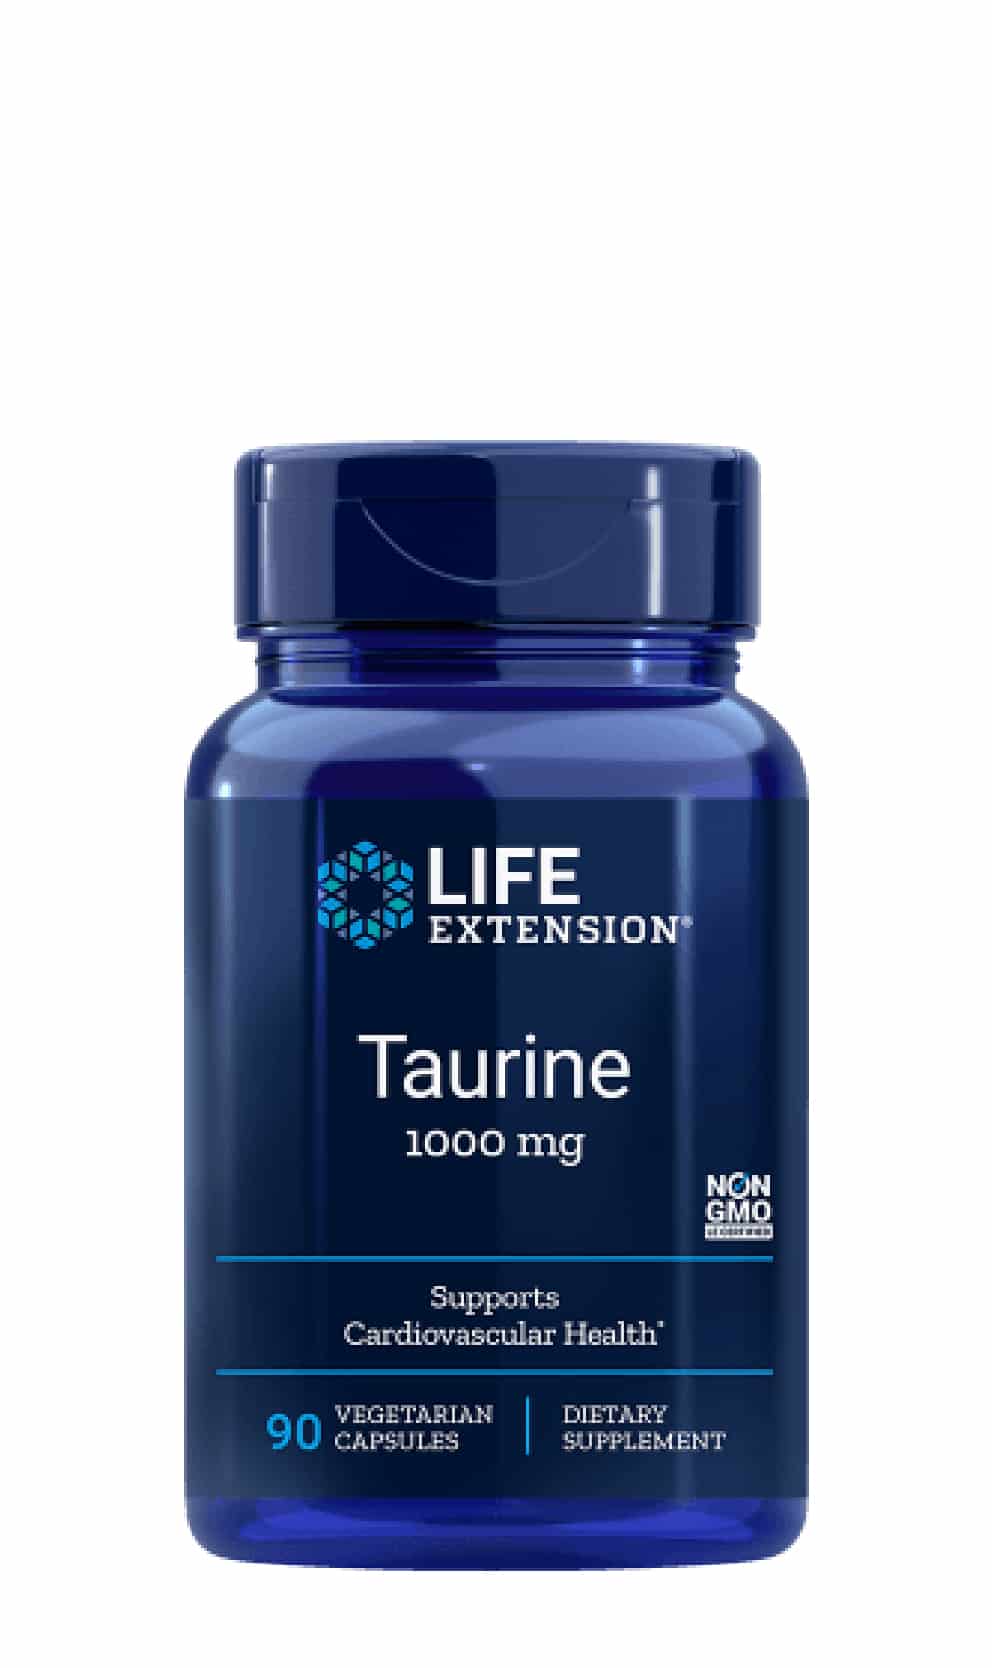 Koop Life Extension Taurine bij LiveHelfi